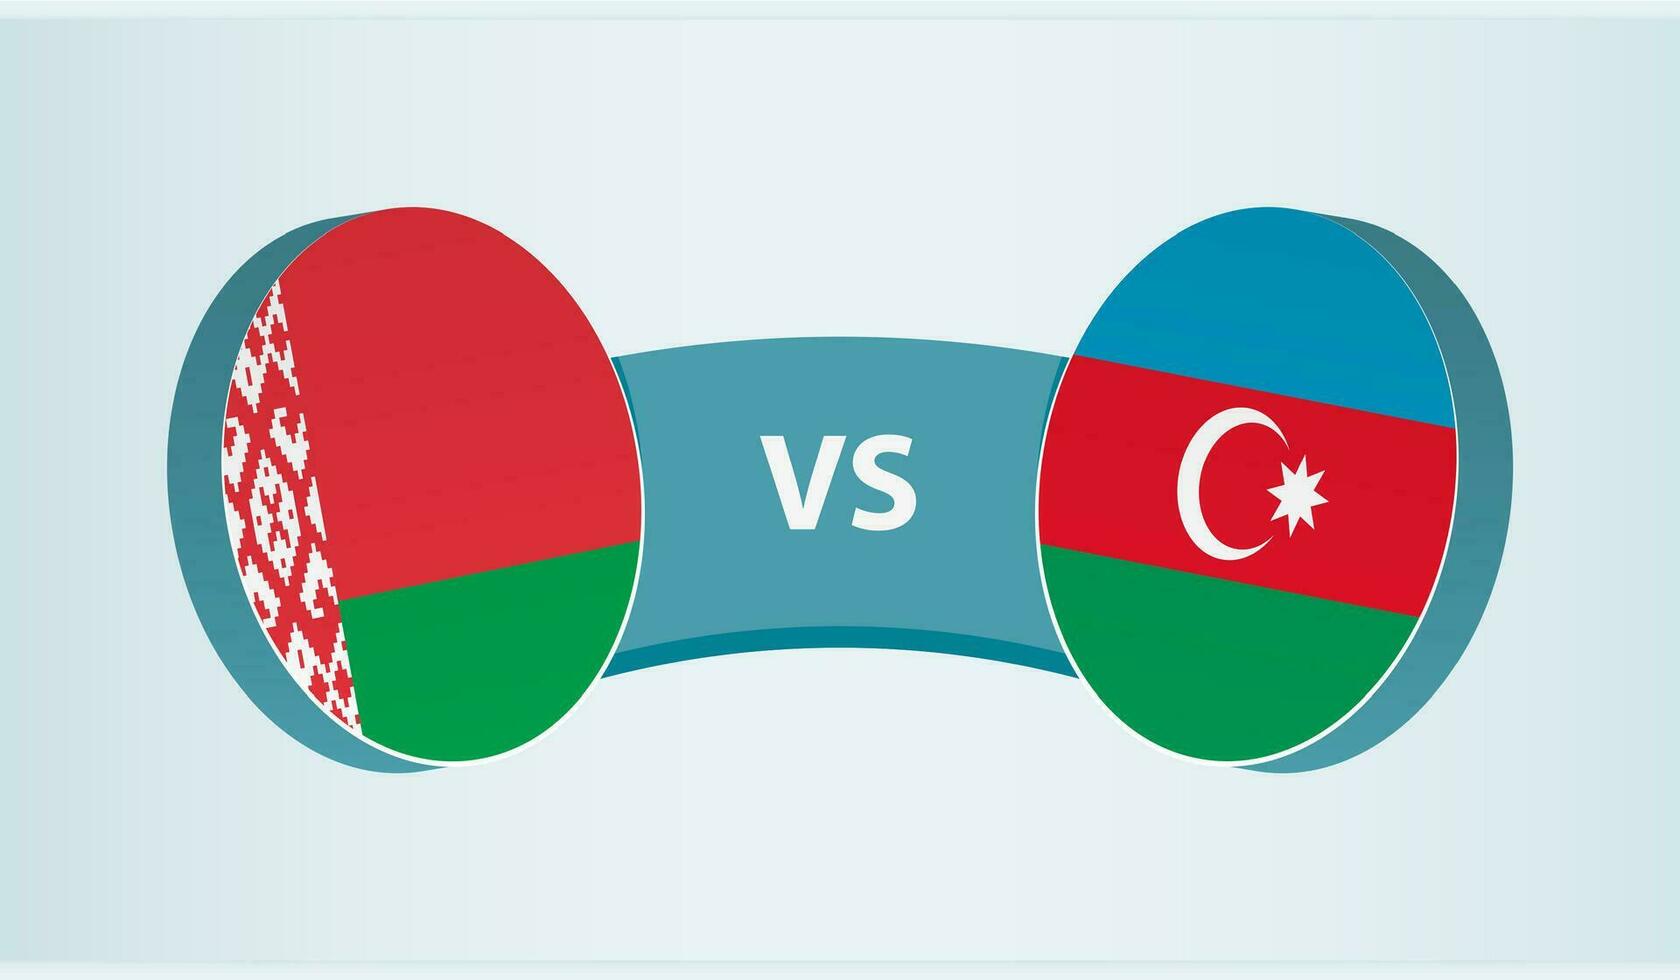 Vitryssland mot azerbajdzjan, team sporter konkurrens begrepp. vektor